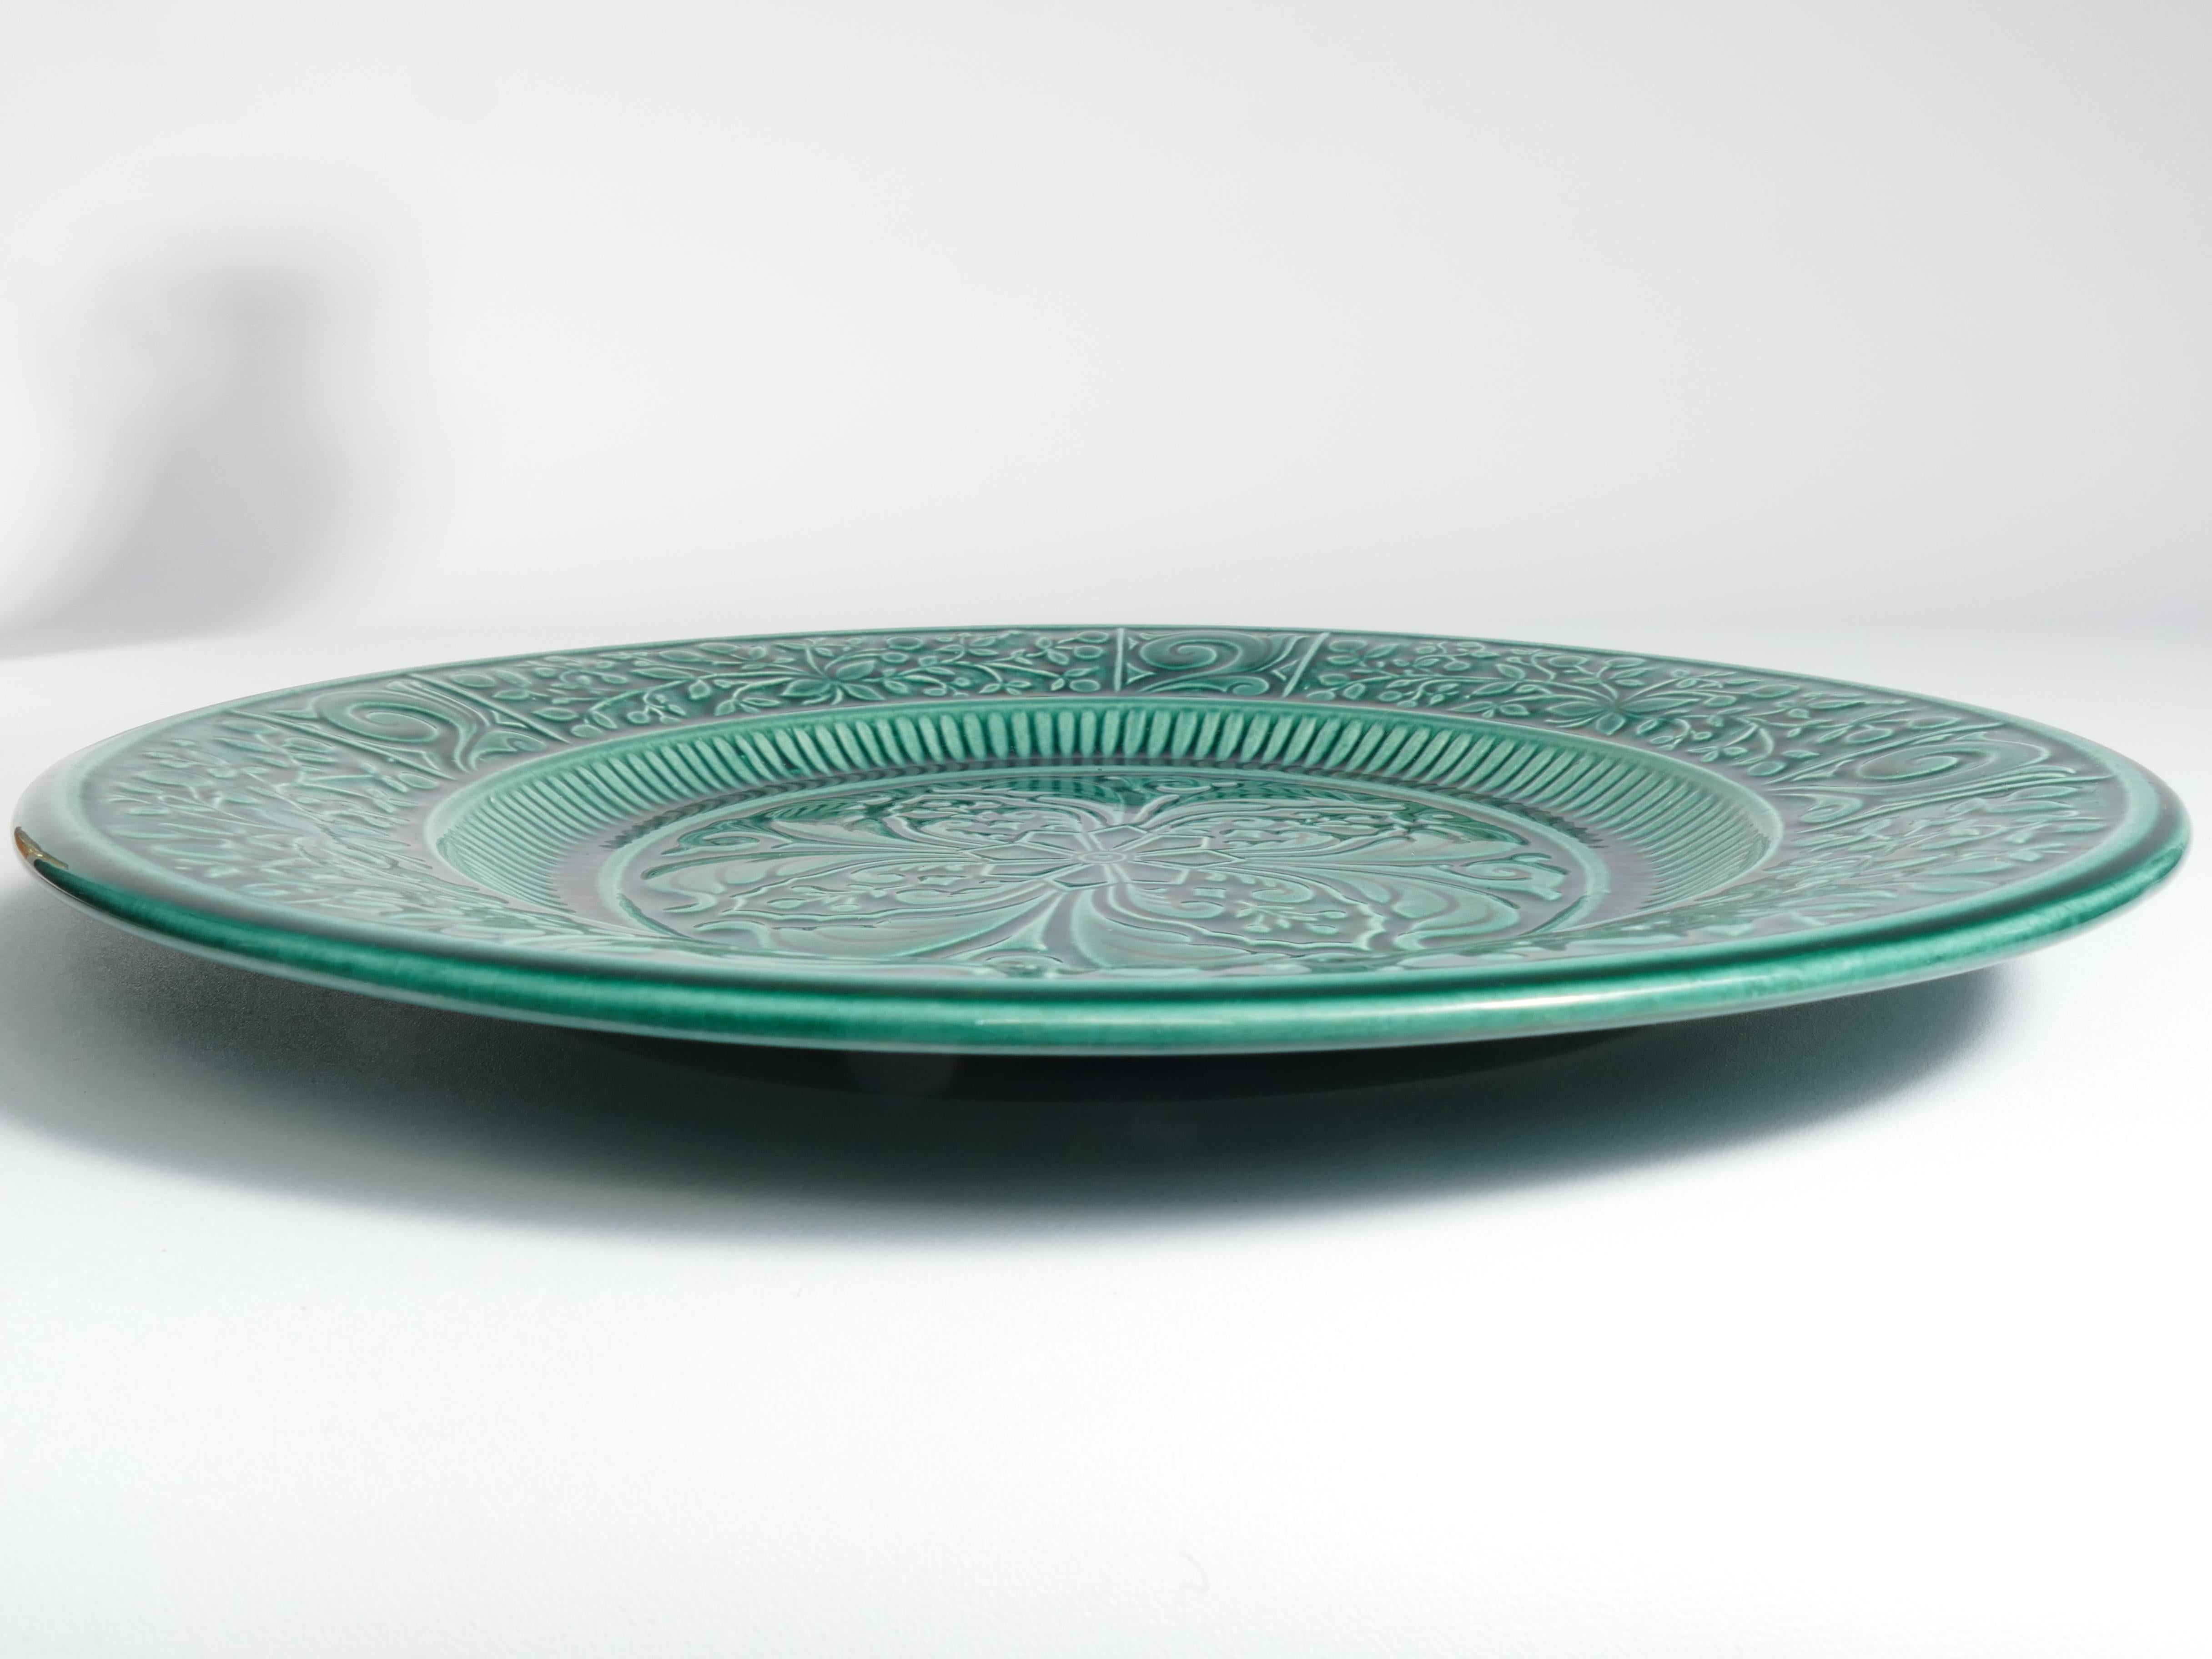 Large Scandinavian Modern Green Plate, Arol Ceramic, Halden Norway, 1950s For Sale 5